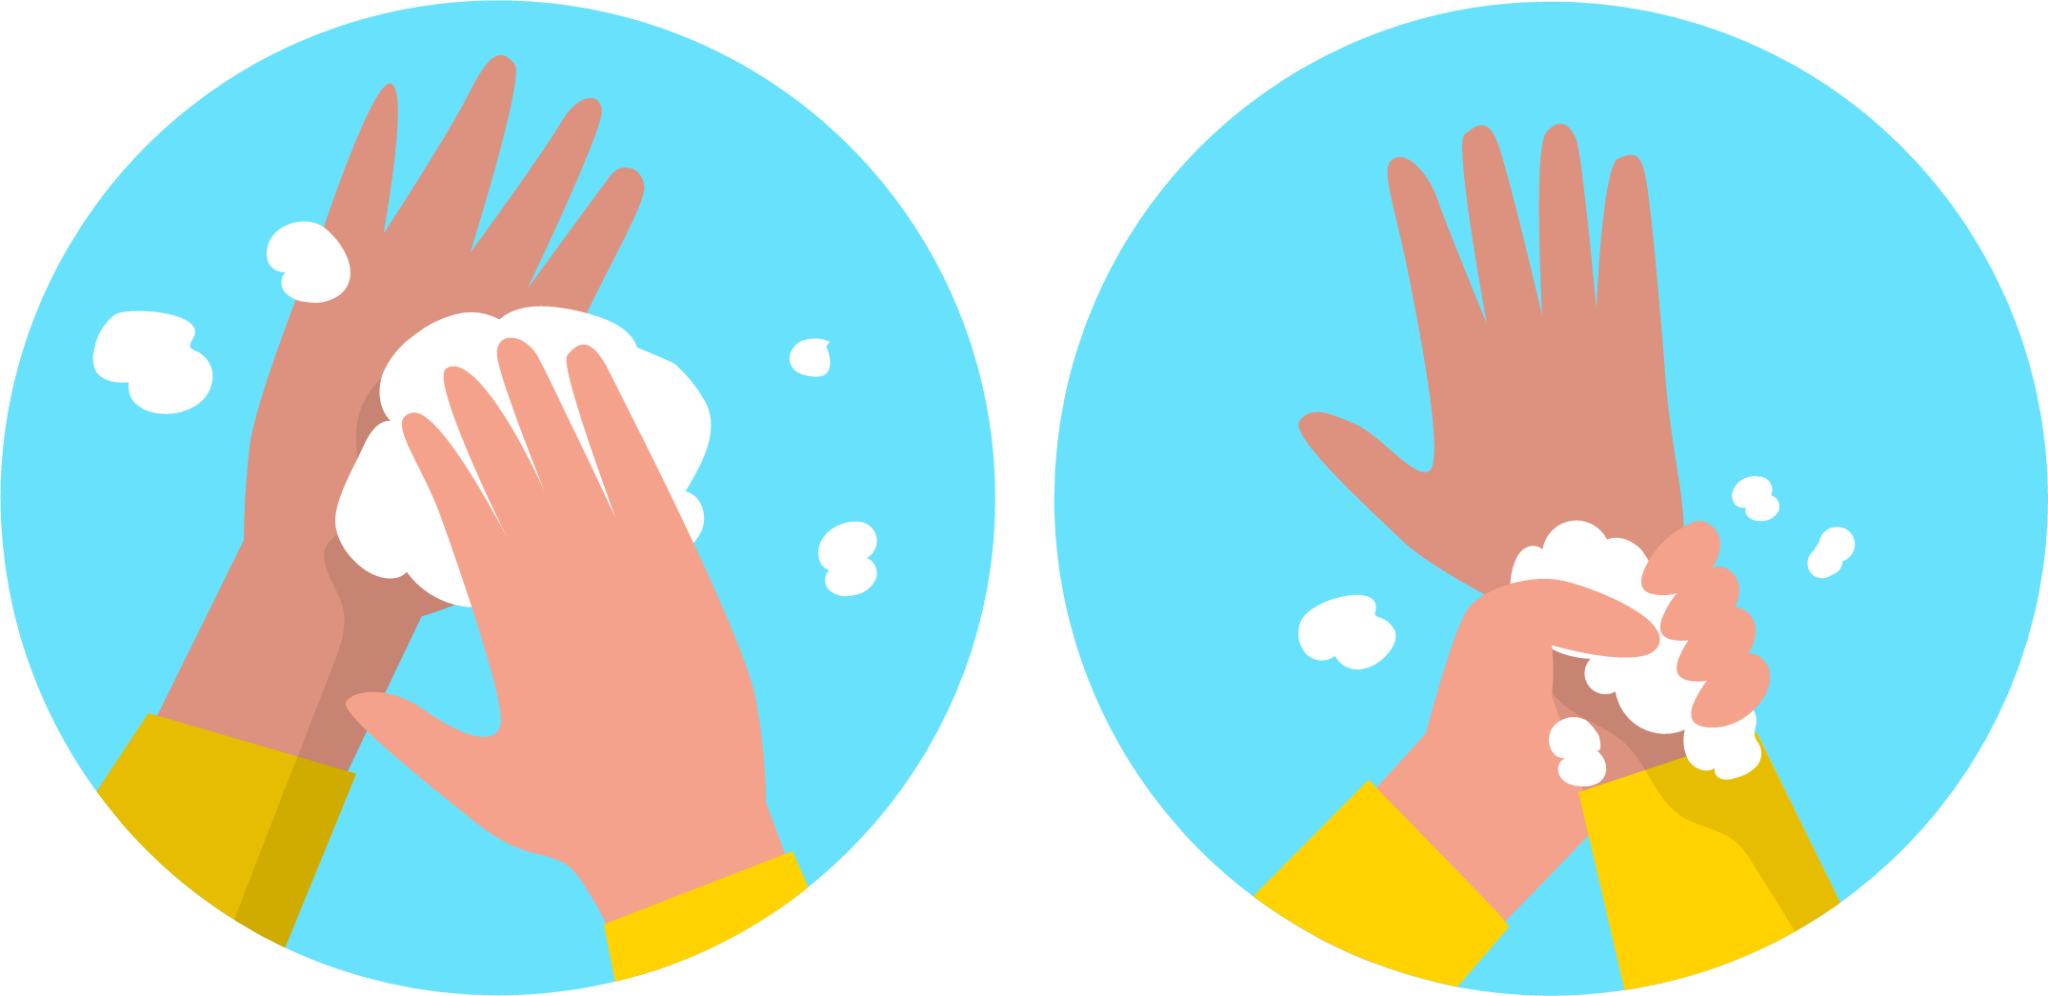 Washing hands illustration